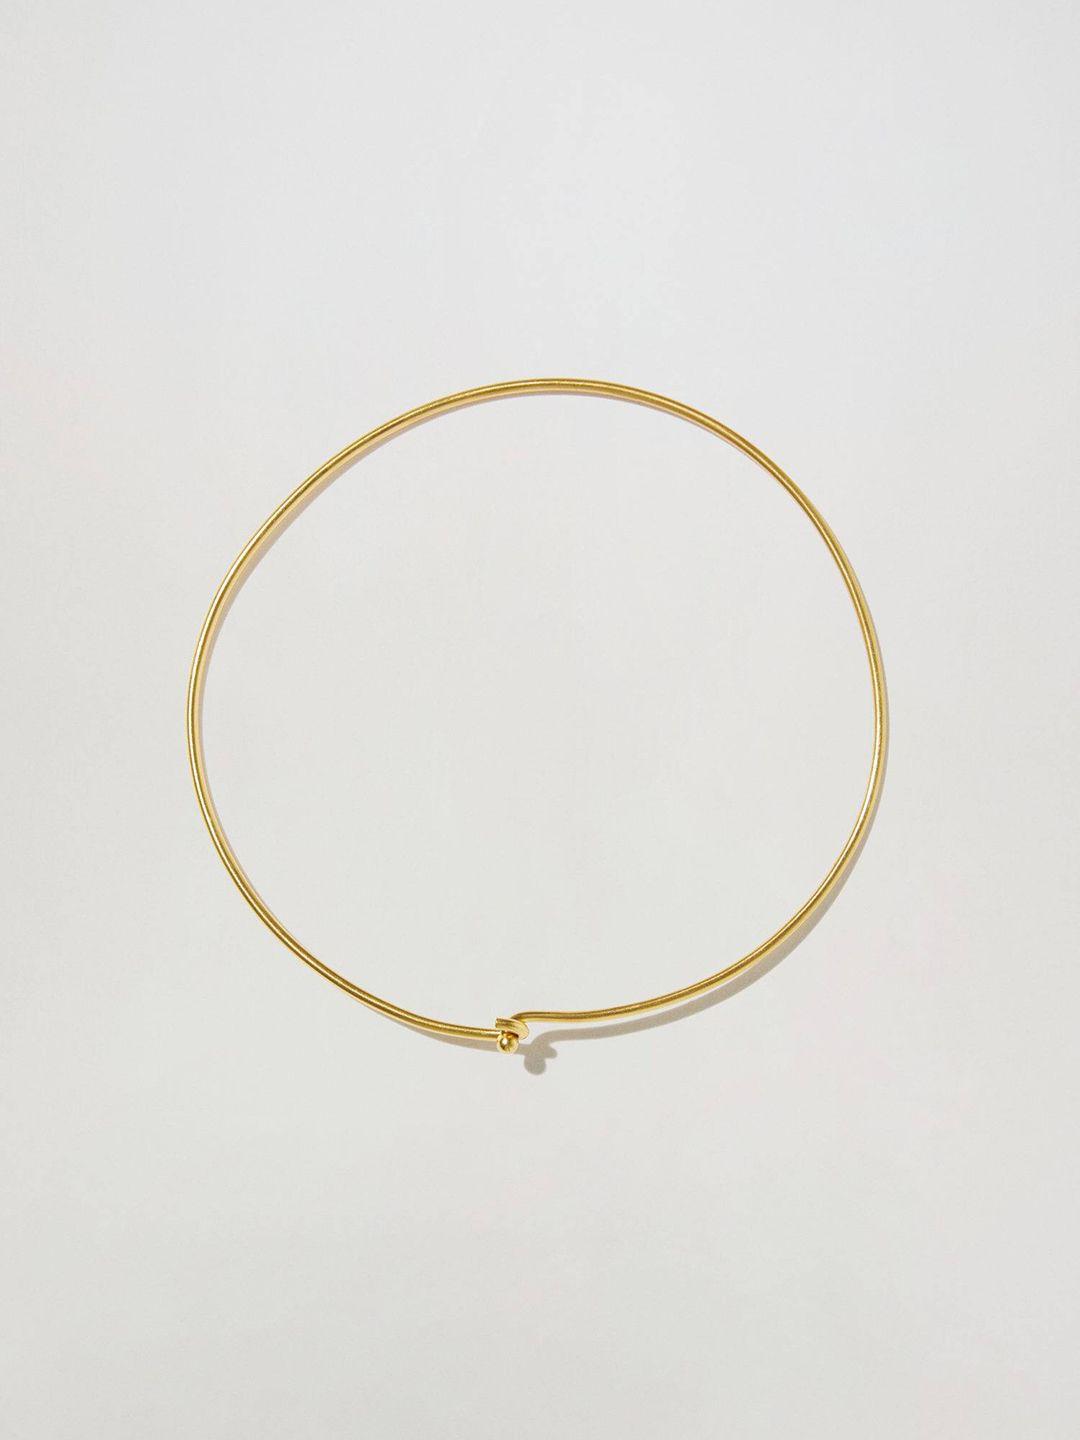 mango 24k gold-plated brass rigid choker necklace